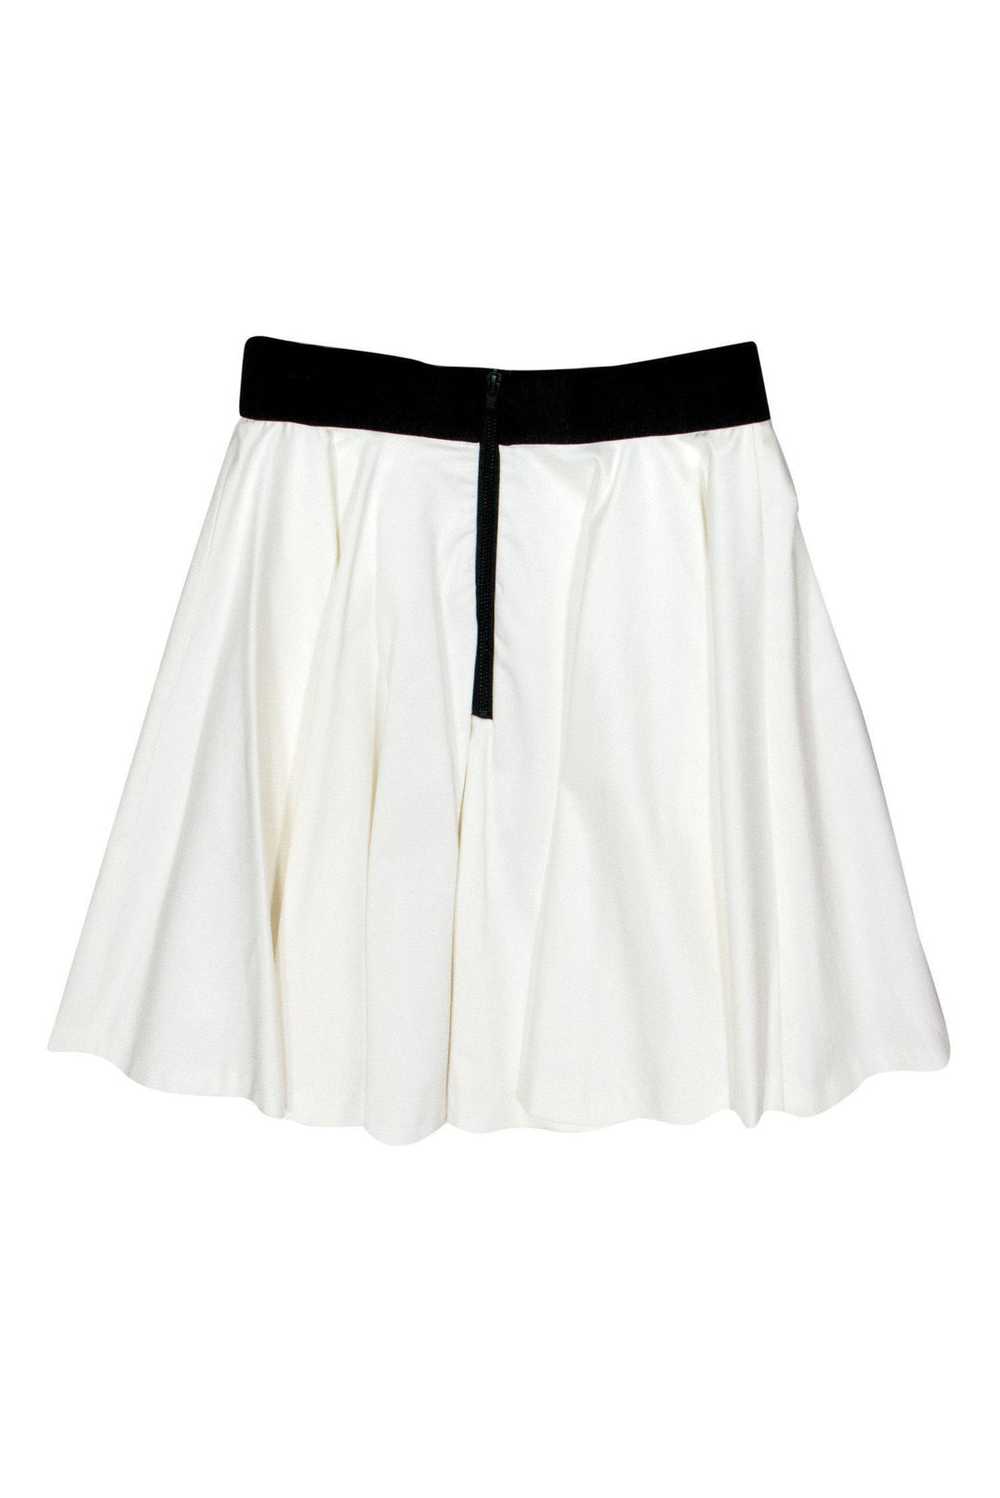 Milly - White Flare Skirt w/ Black Waistband Sz 4 - image 2